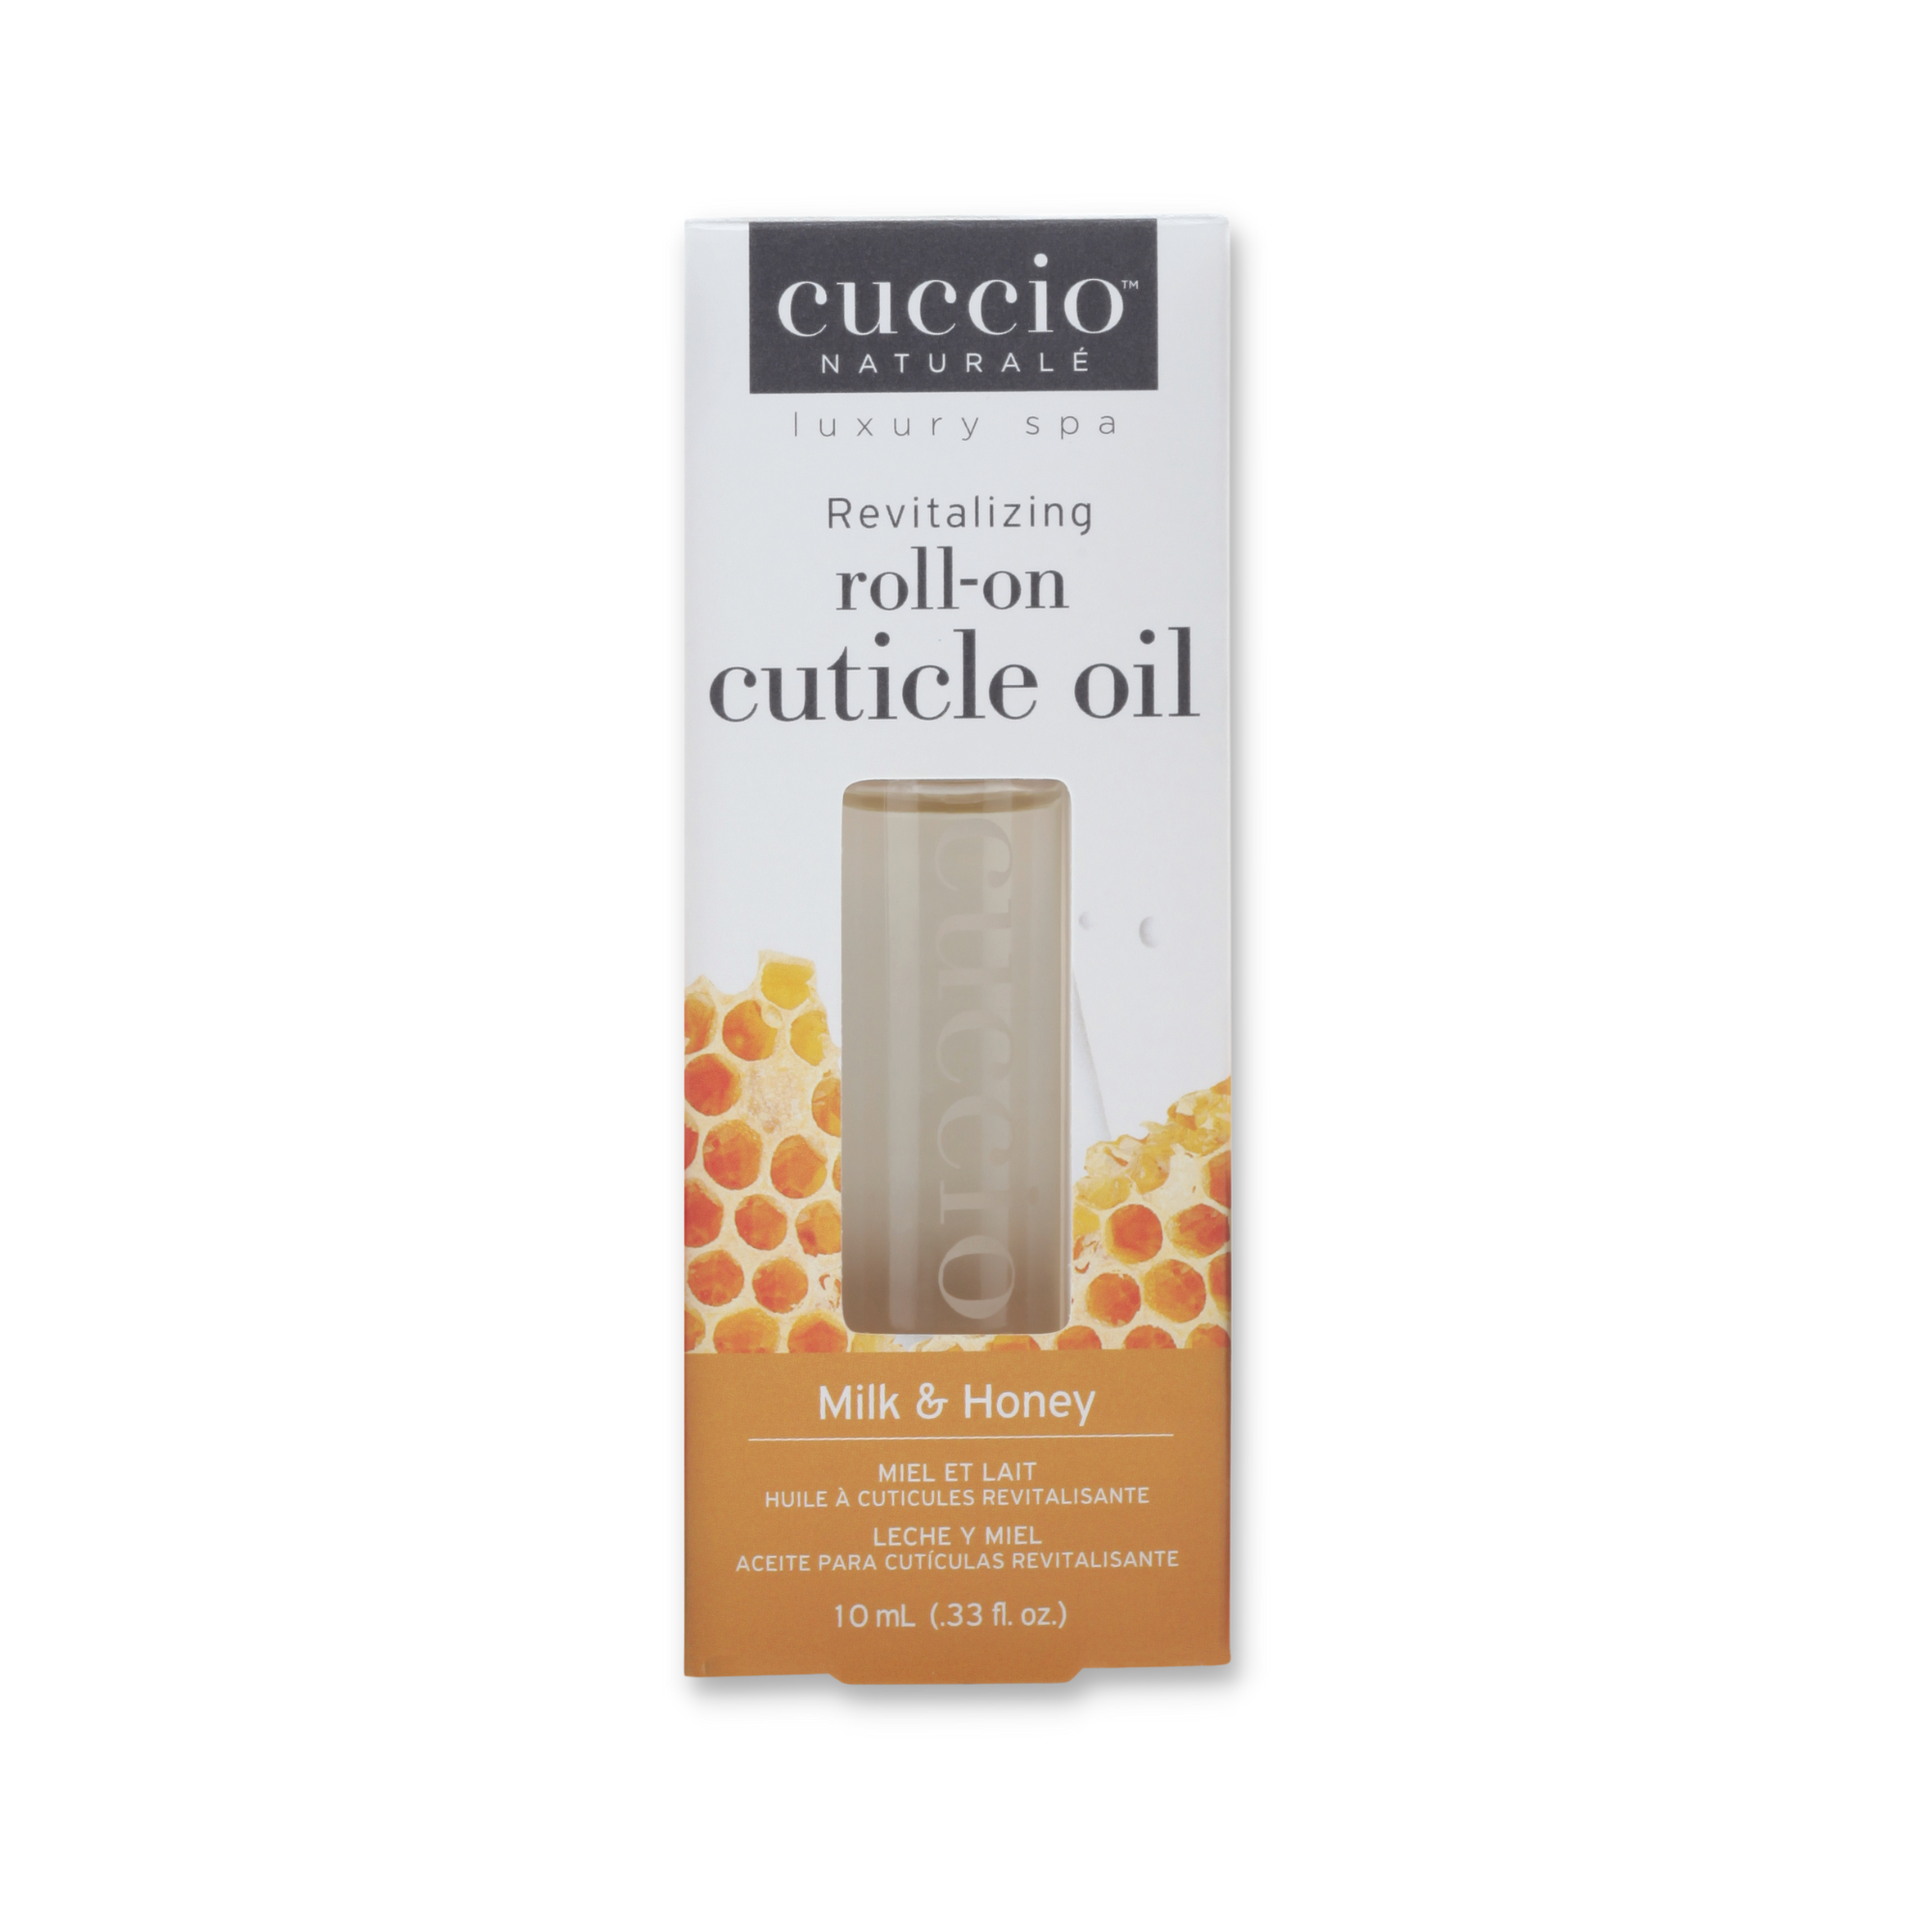 Cuccio Naturalé Revitalizing Roll-on Cuticle Oil - Milk & Honey 10ml